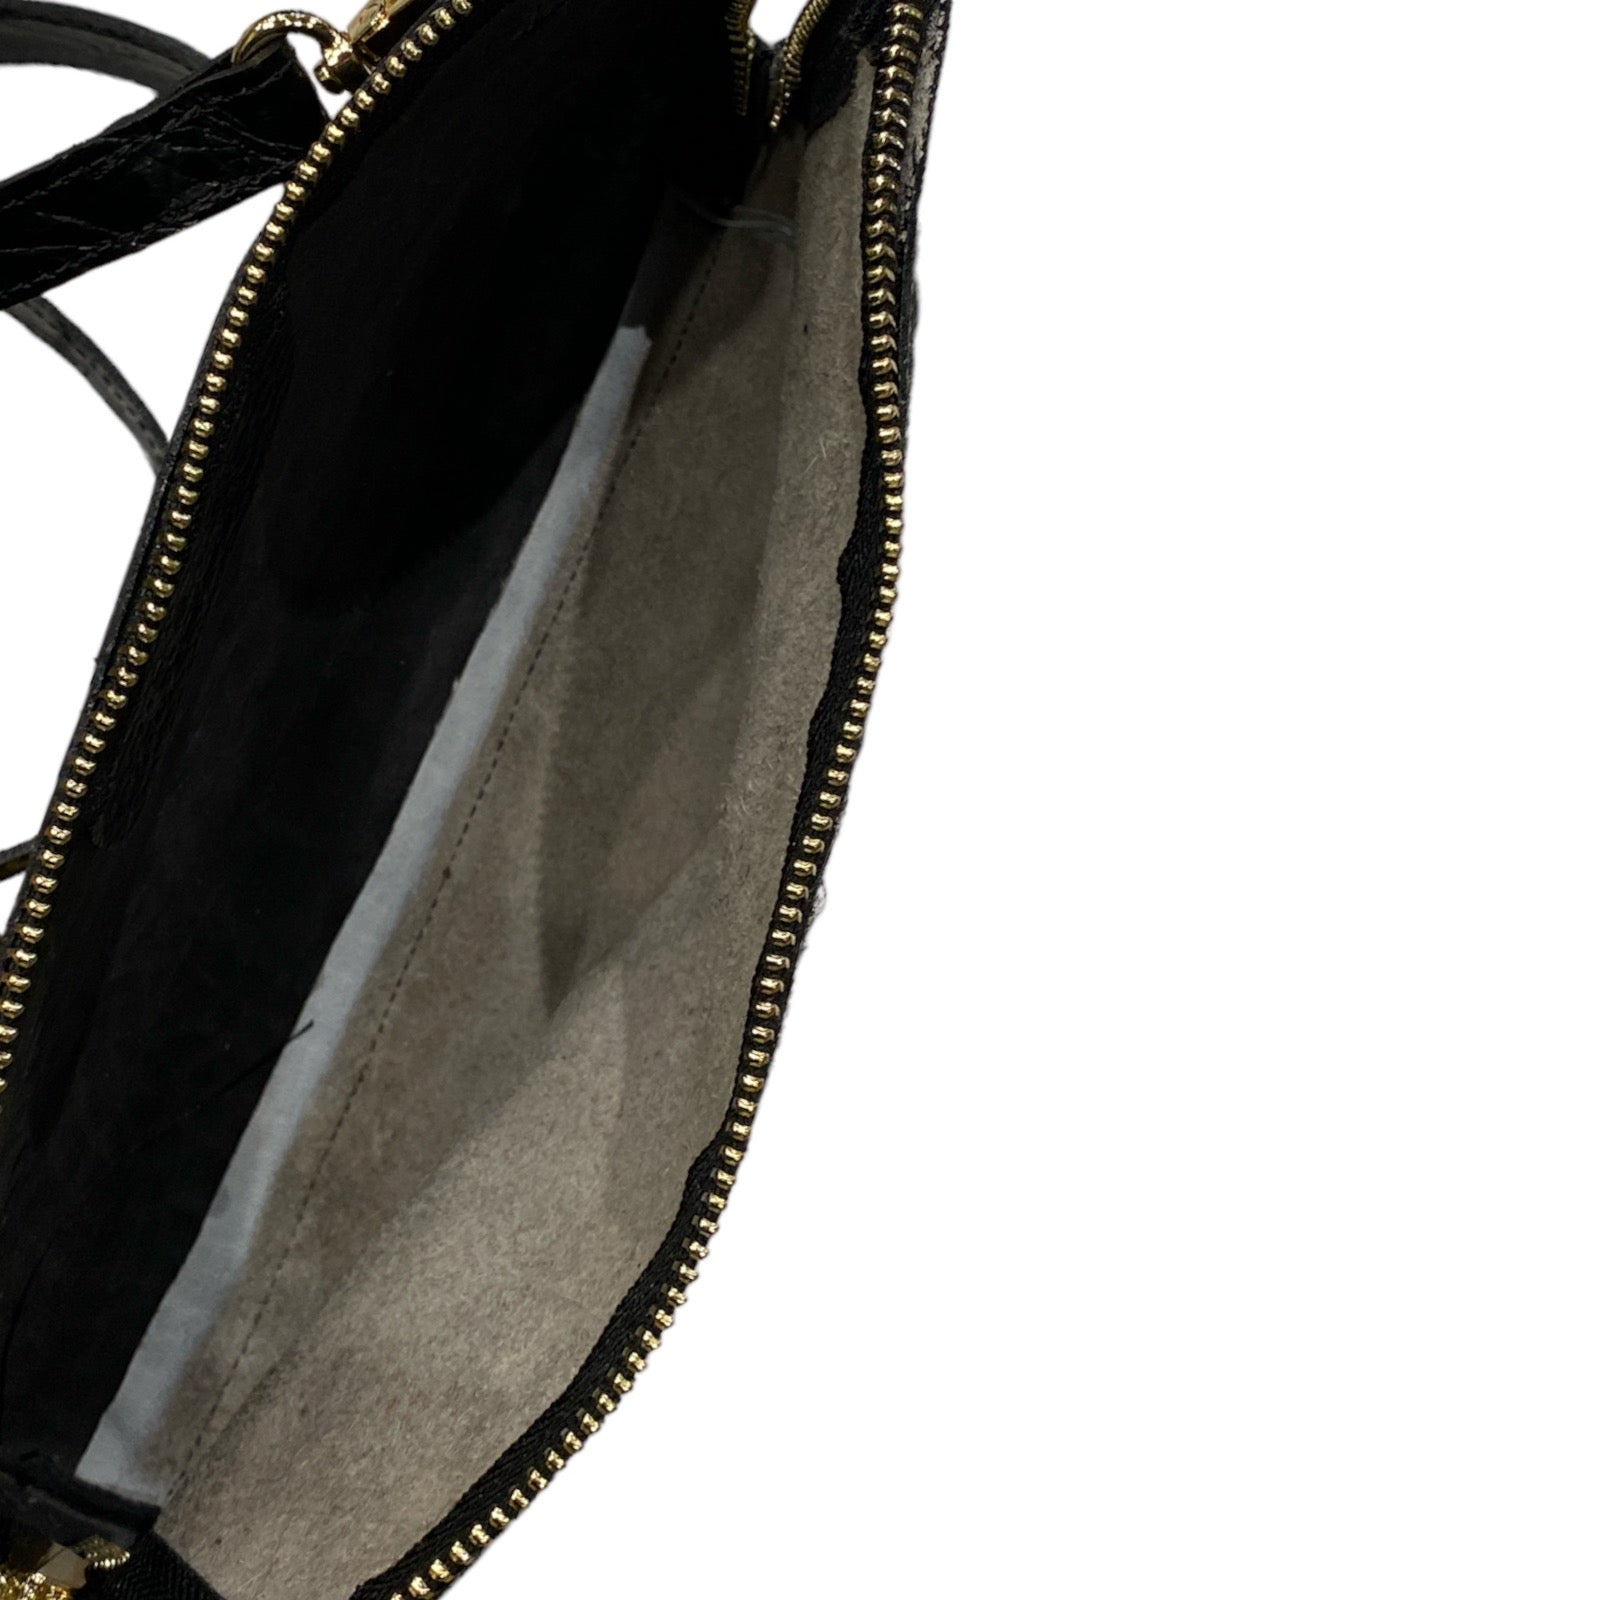 Box XL. Black and white calf-hair leather messenger bag